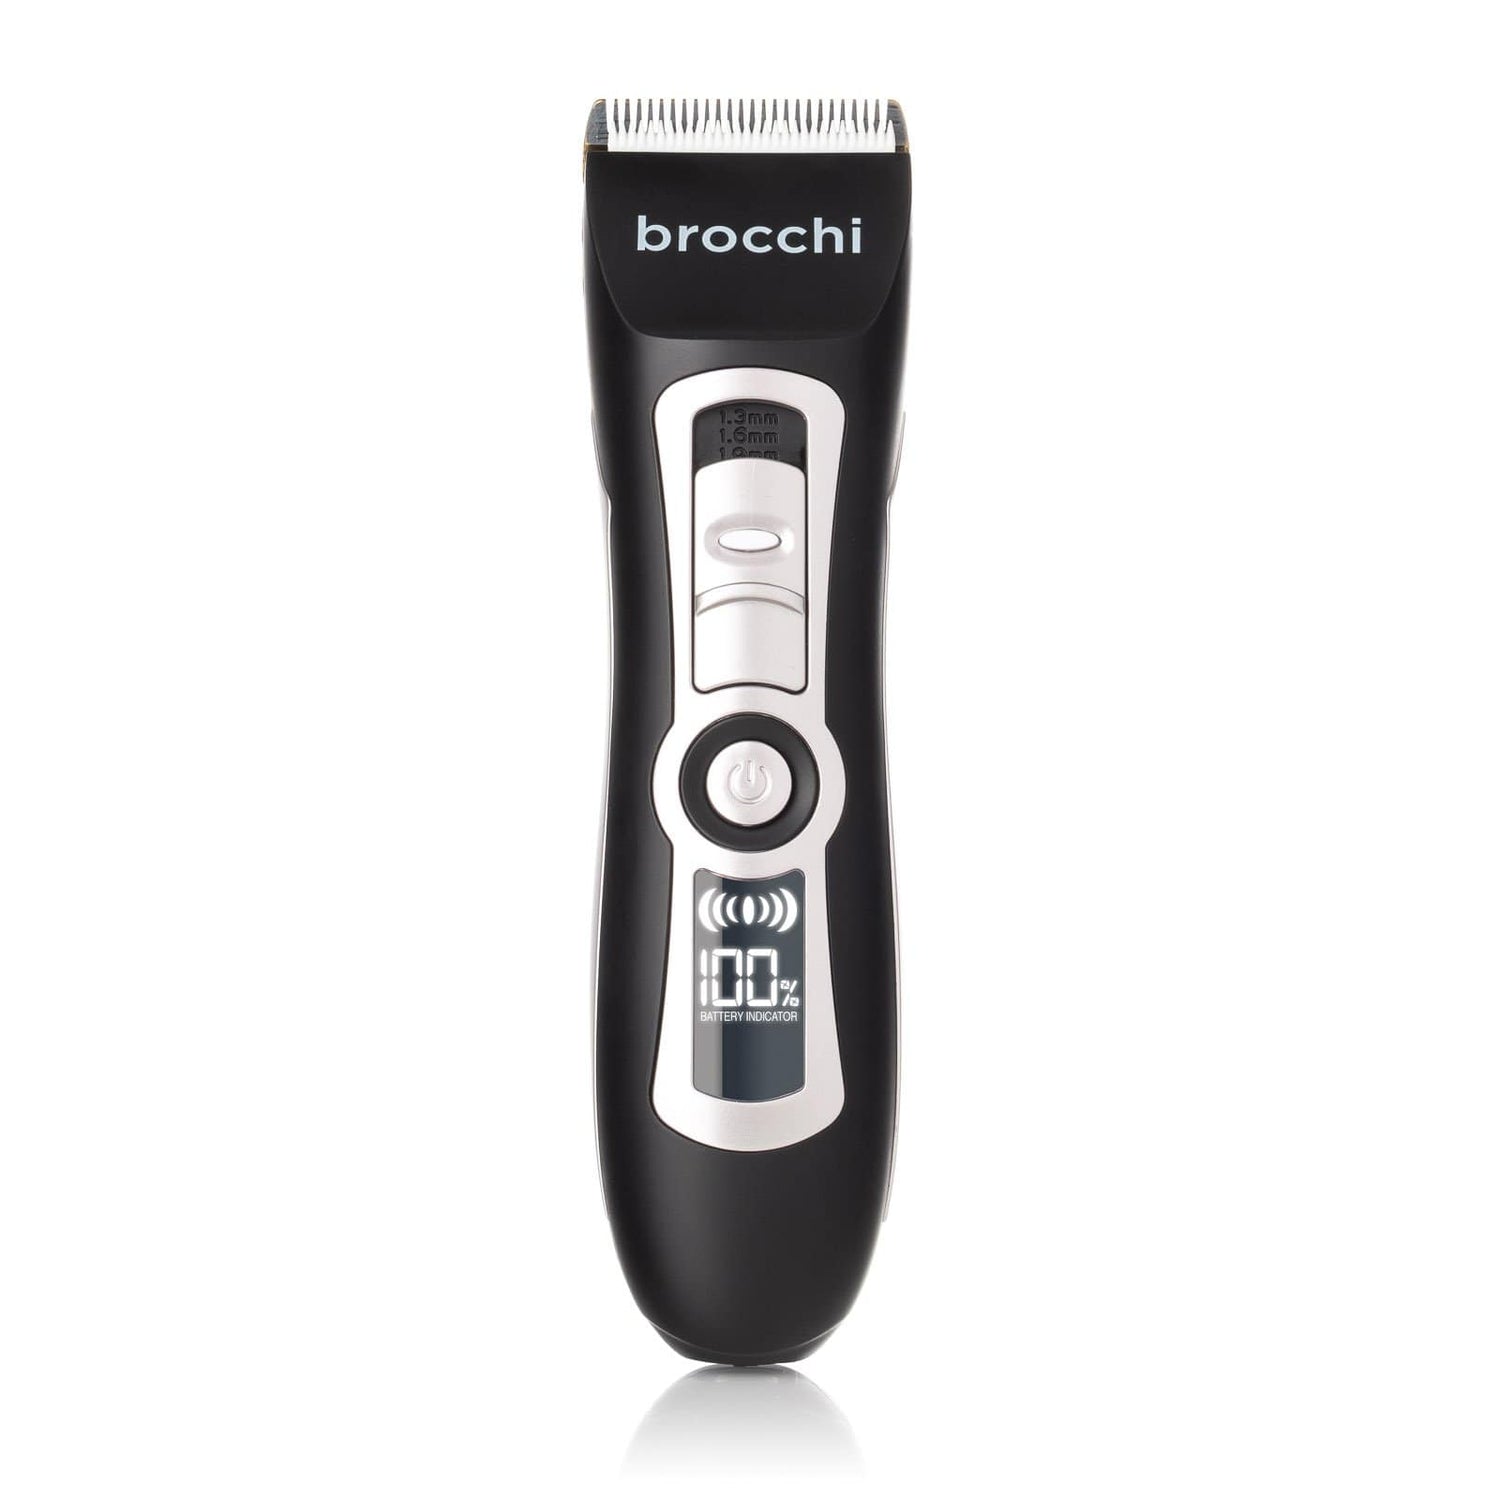 Brocchi Digital Electric Grooming Trimming Tool Kit for Men